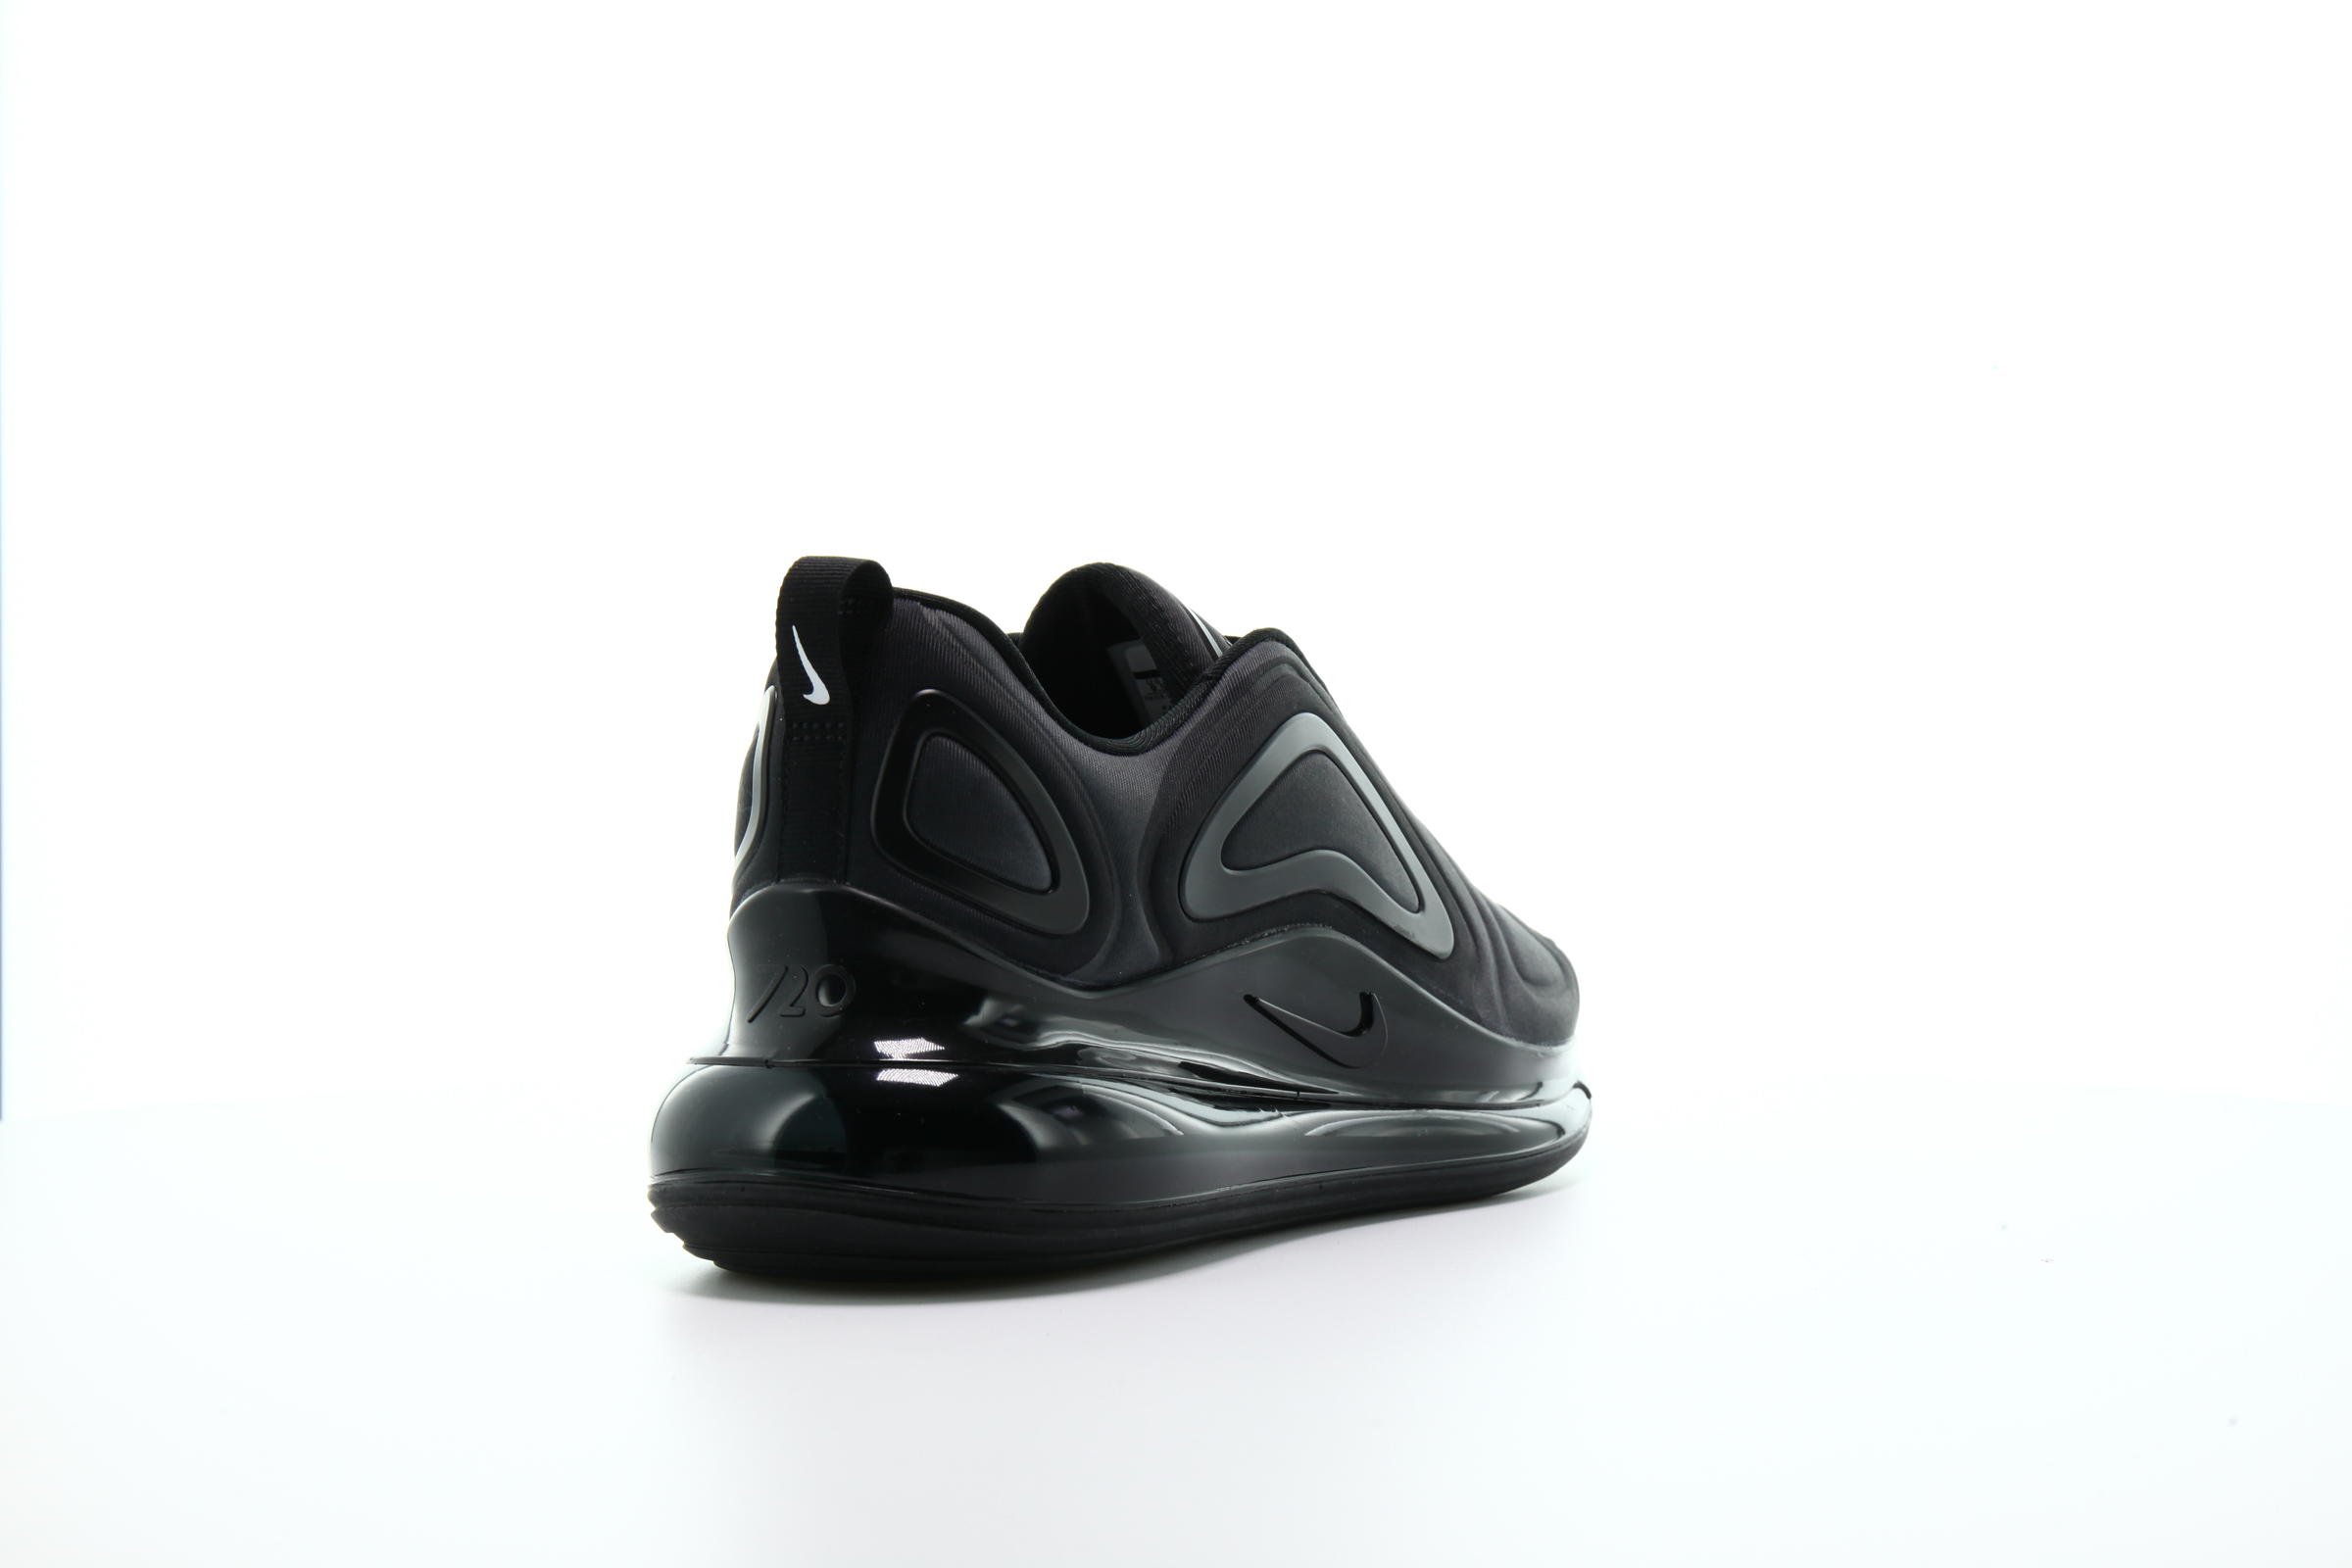 Nike Air Max 720 "Black"